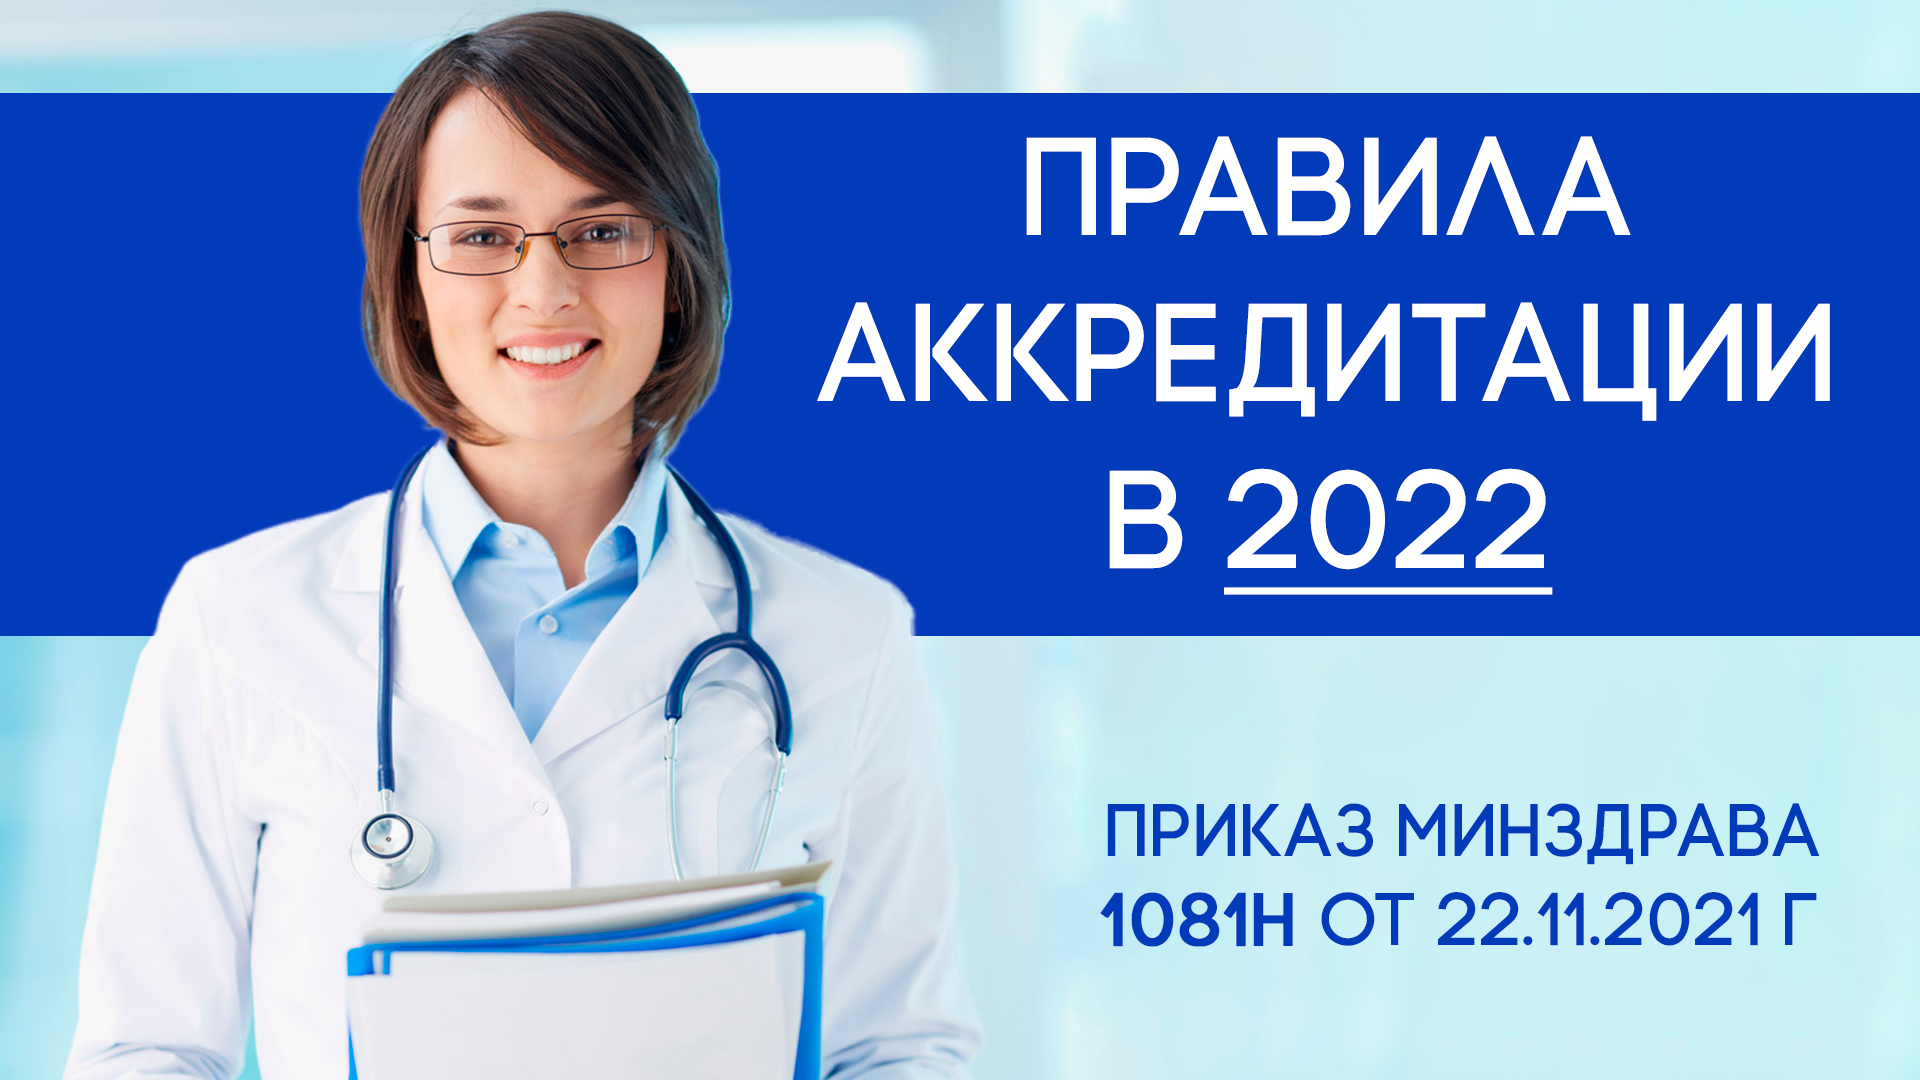 Аккредитация медицинских сестер сайт. Аккредитация медицинских работников. Аккредитация медиков в 2022 году. Аккредитация медицинских работников в 2022. Аккредитация специалистов 2022.